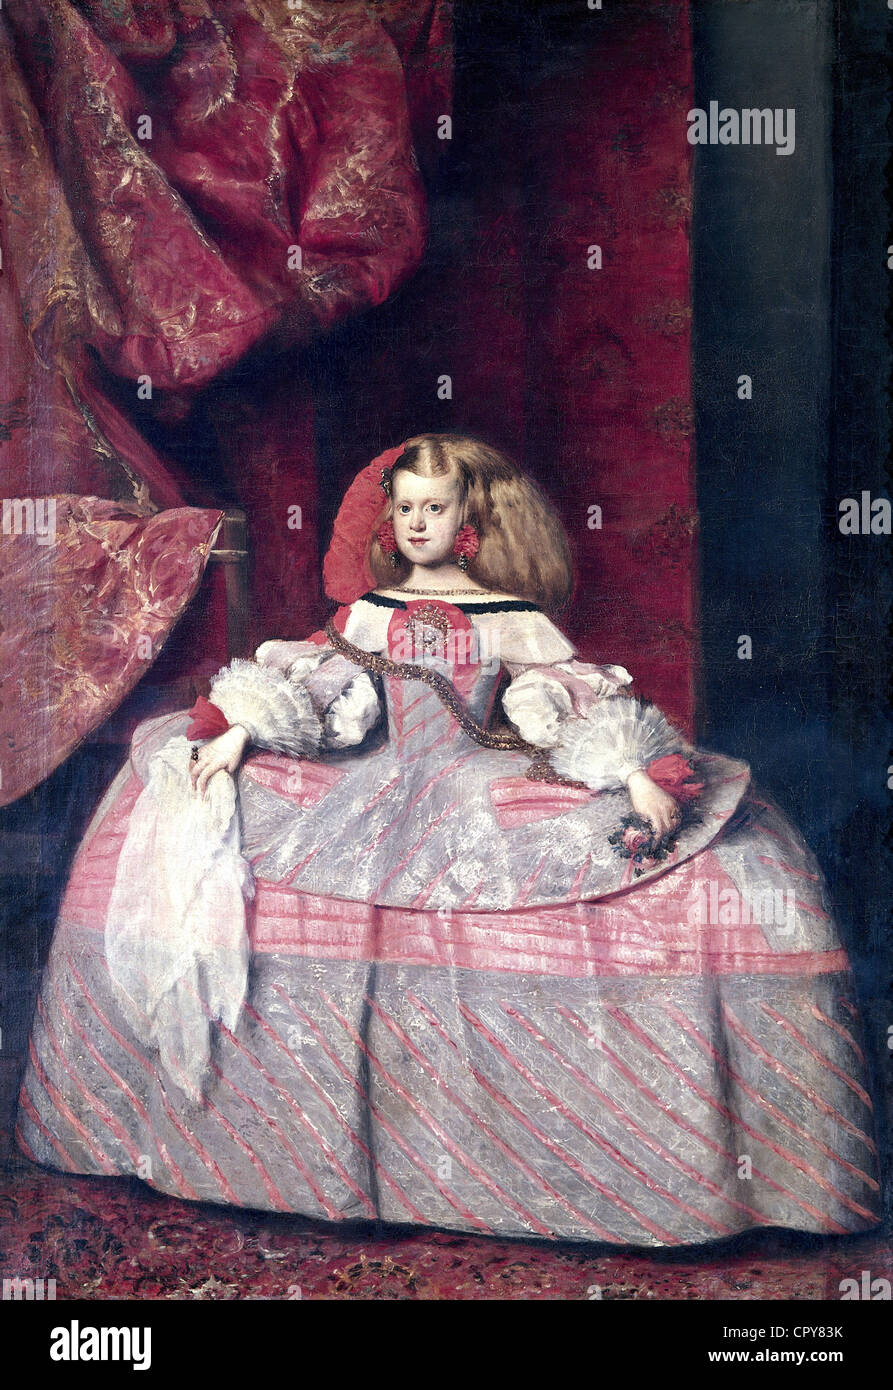 fine arts, Velazquez, Diego Rodriguez de Silva y (1599 - 1660), painting 'La Infanta Dona Margarita de Austria', 1660, Prado, Madrid, Artist's Copyright has not to be cleared Stock Photo